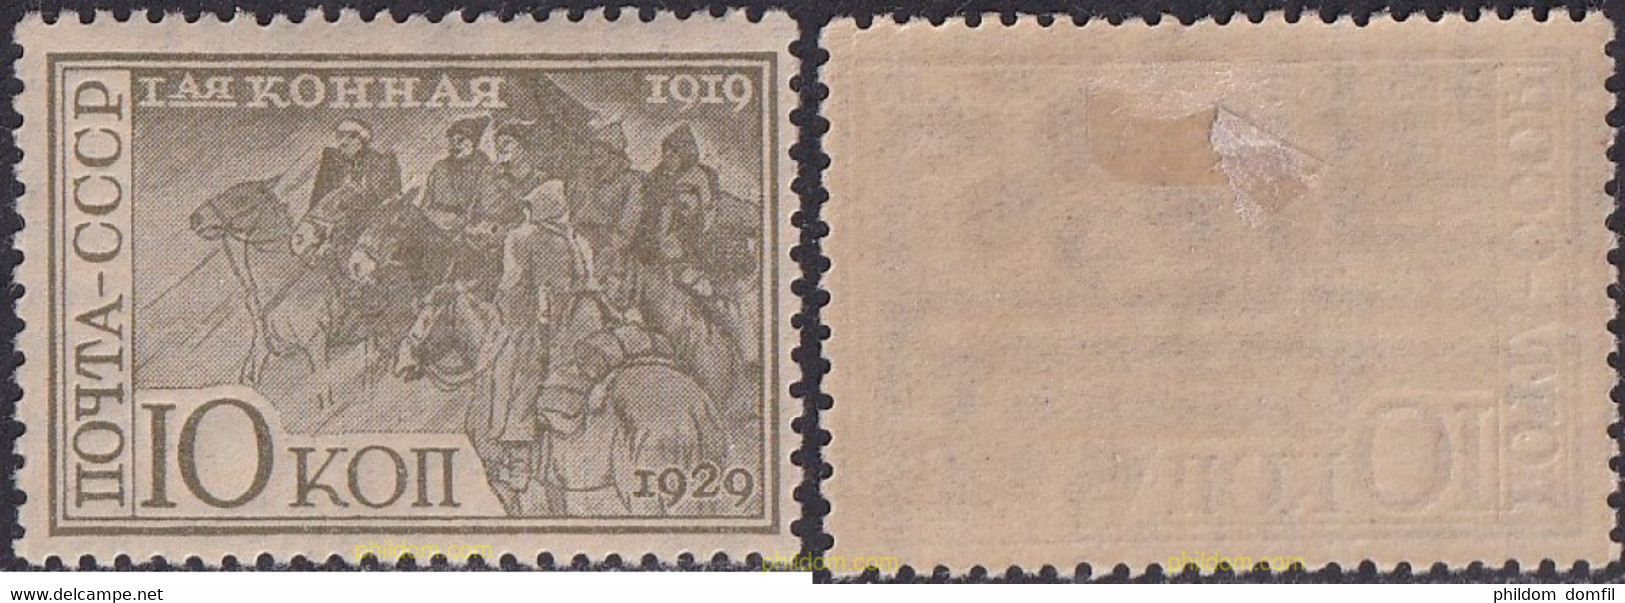 693680 HINGED UNION SOVIETICA 1930 CABALLOS - Colecciones